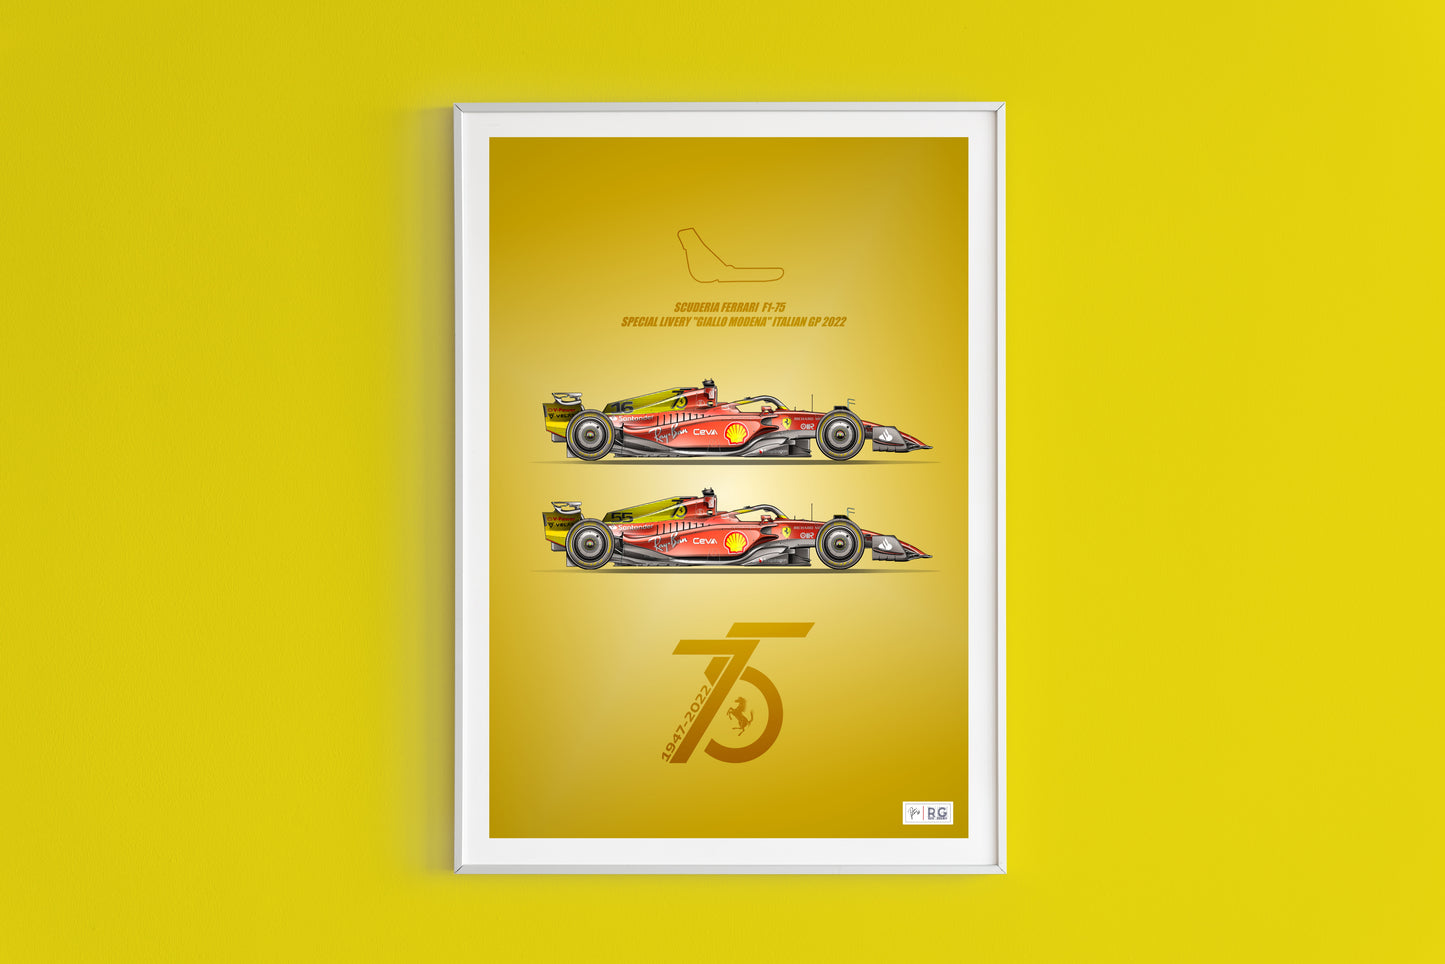 Ferrari F1-75 "Giallo Modena 75 years" Leclerc and Sainz  - Poster - A2/A3